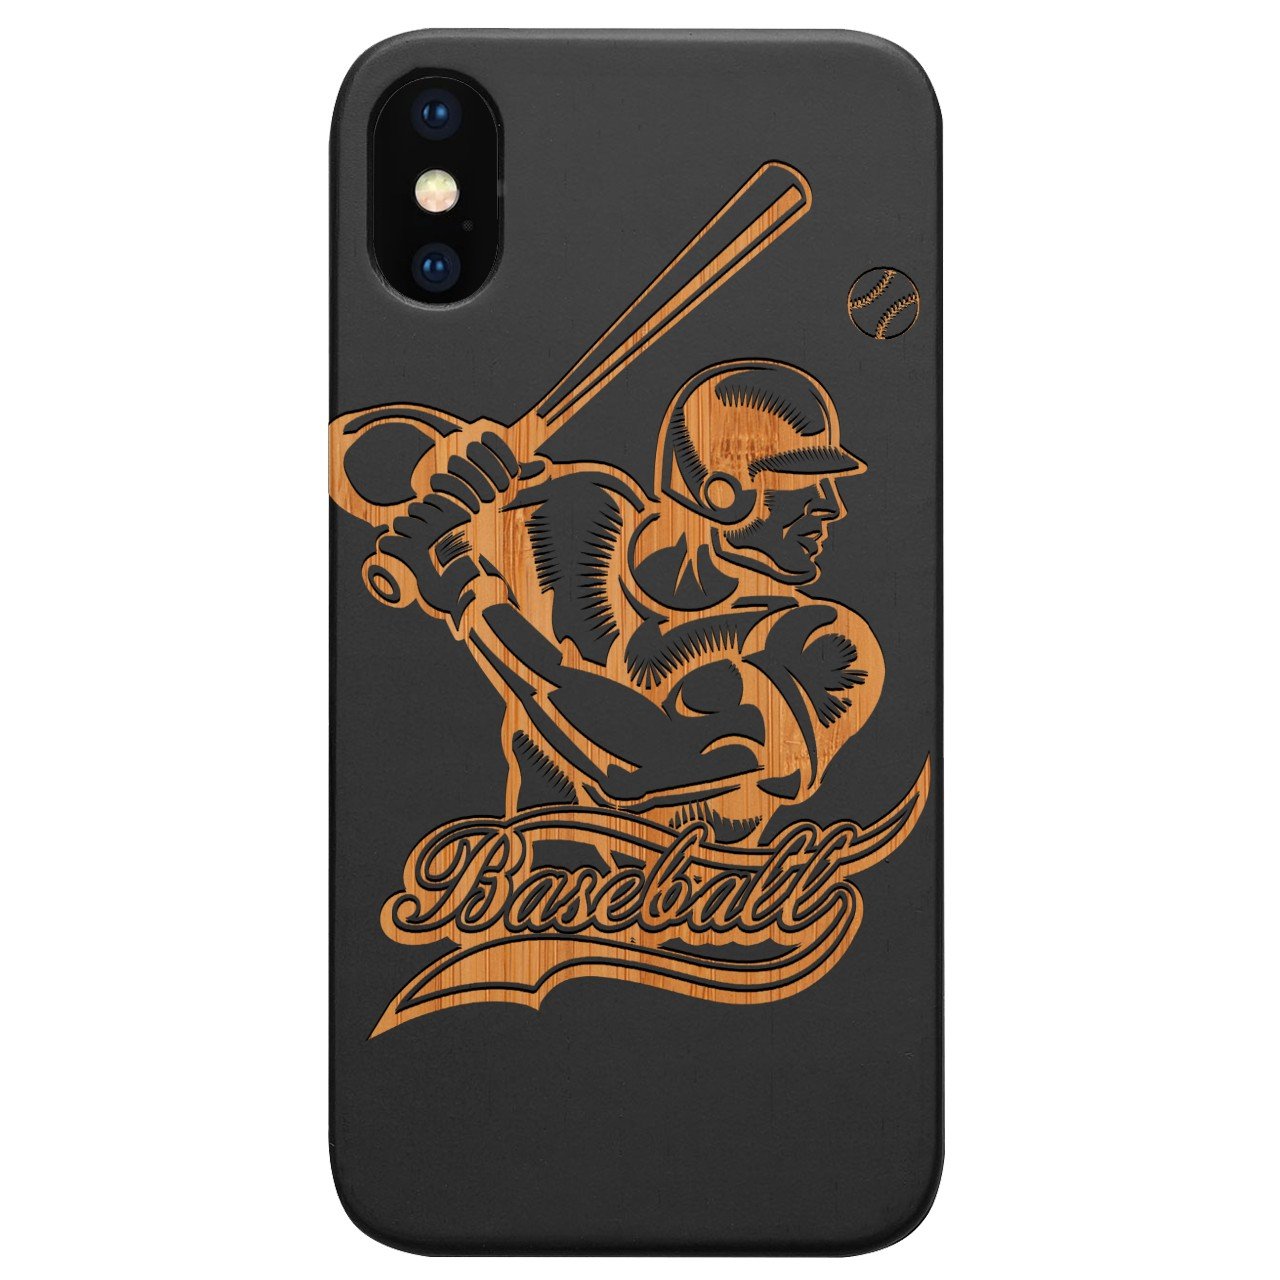 Baseball Player - Engraved - Wooden Phone Case